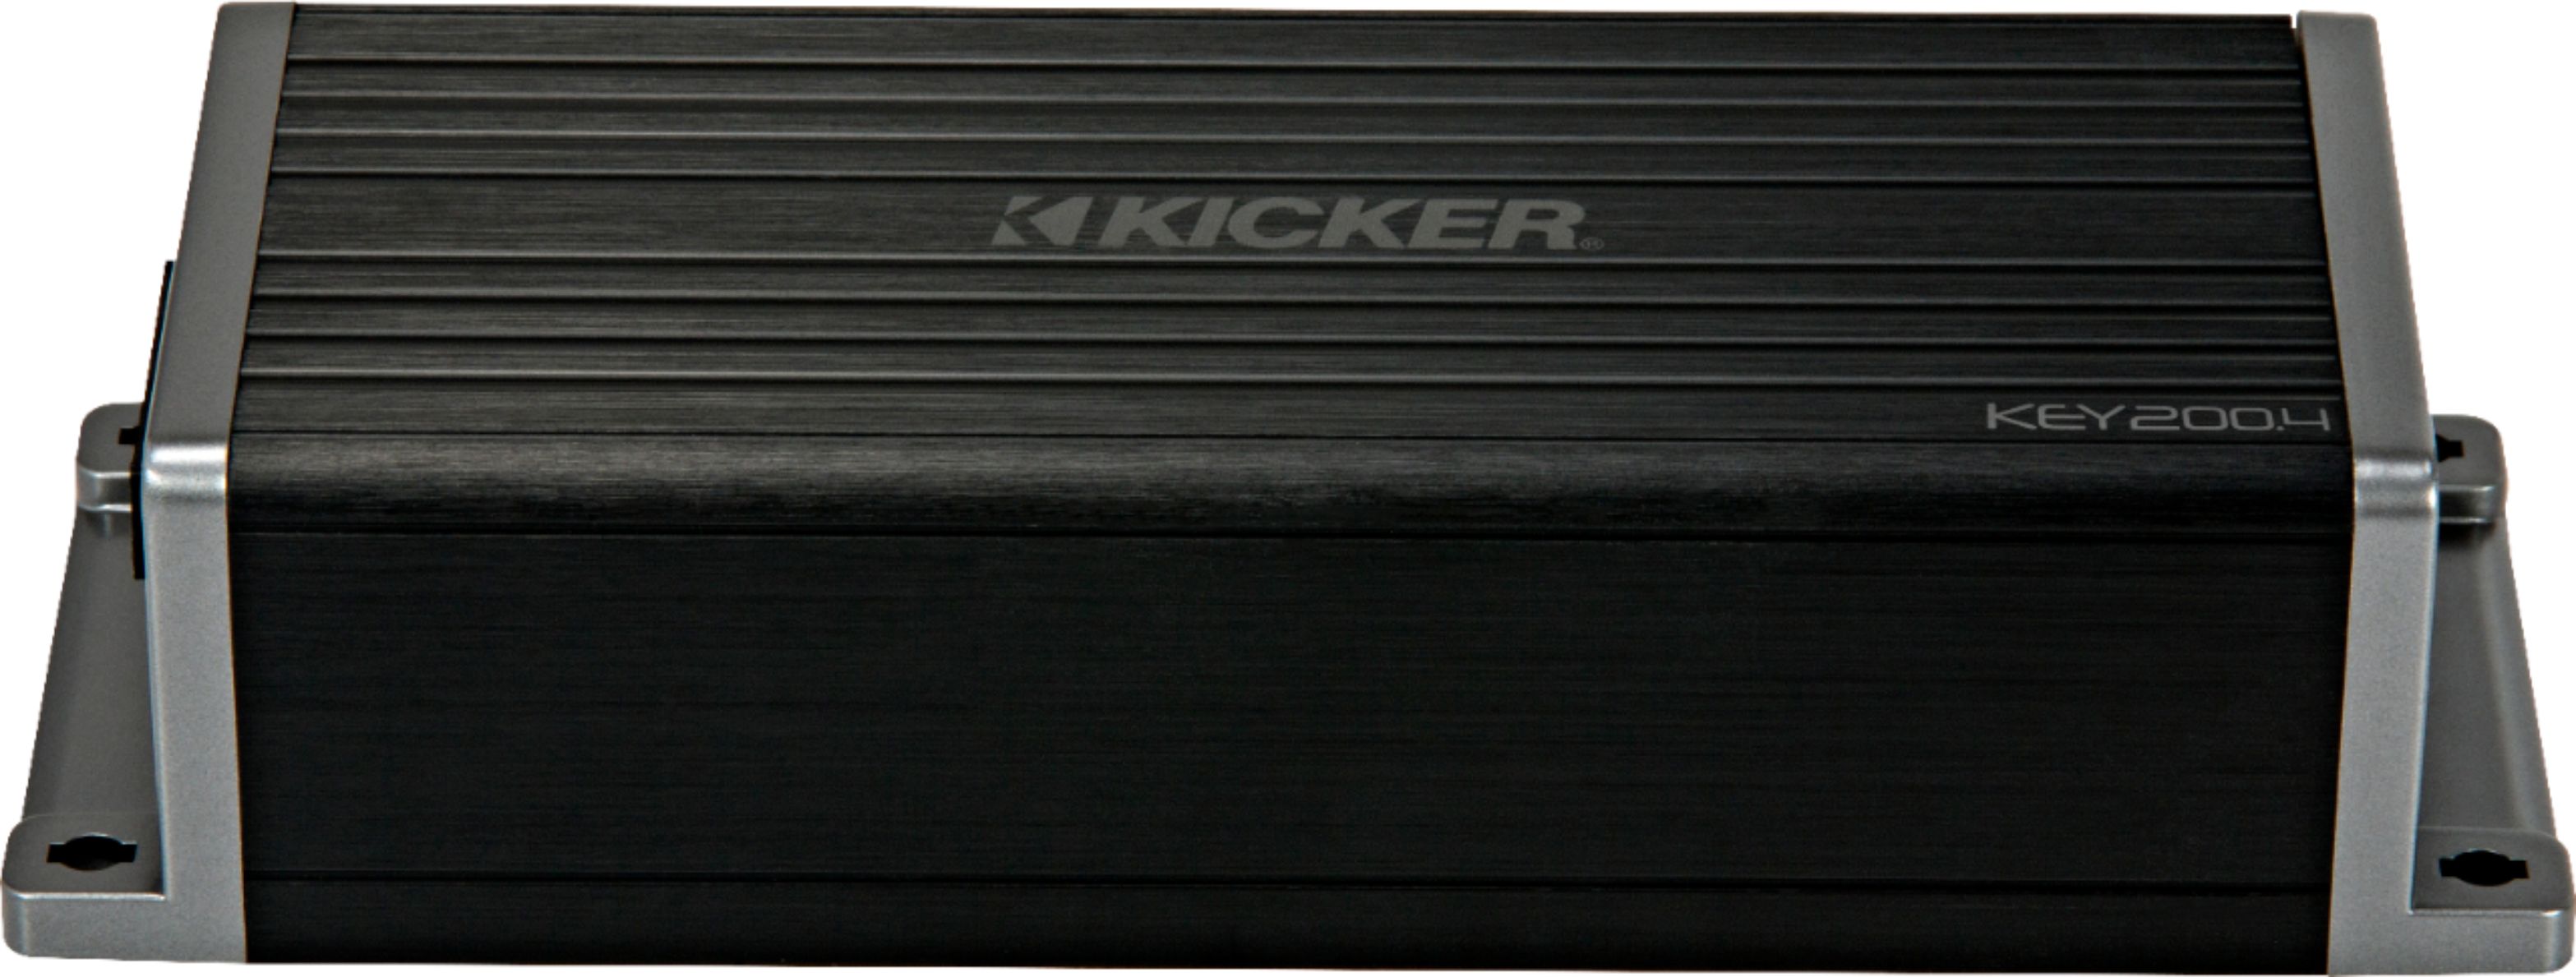 KICKER - KEY 200W Multichannel Amplifier with High-Pass Crossover - Black